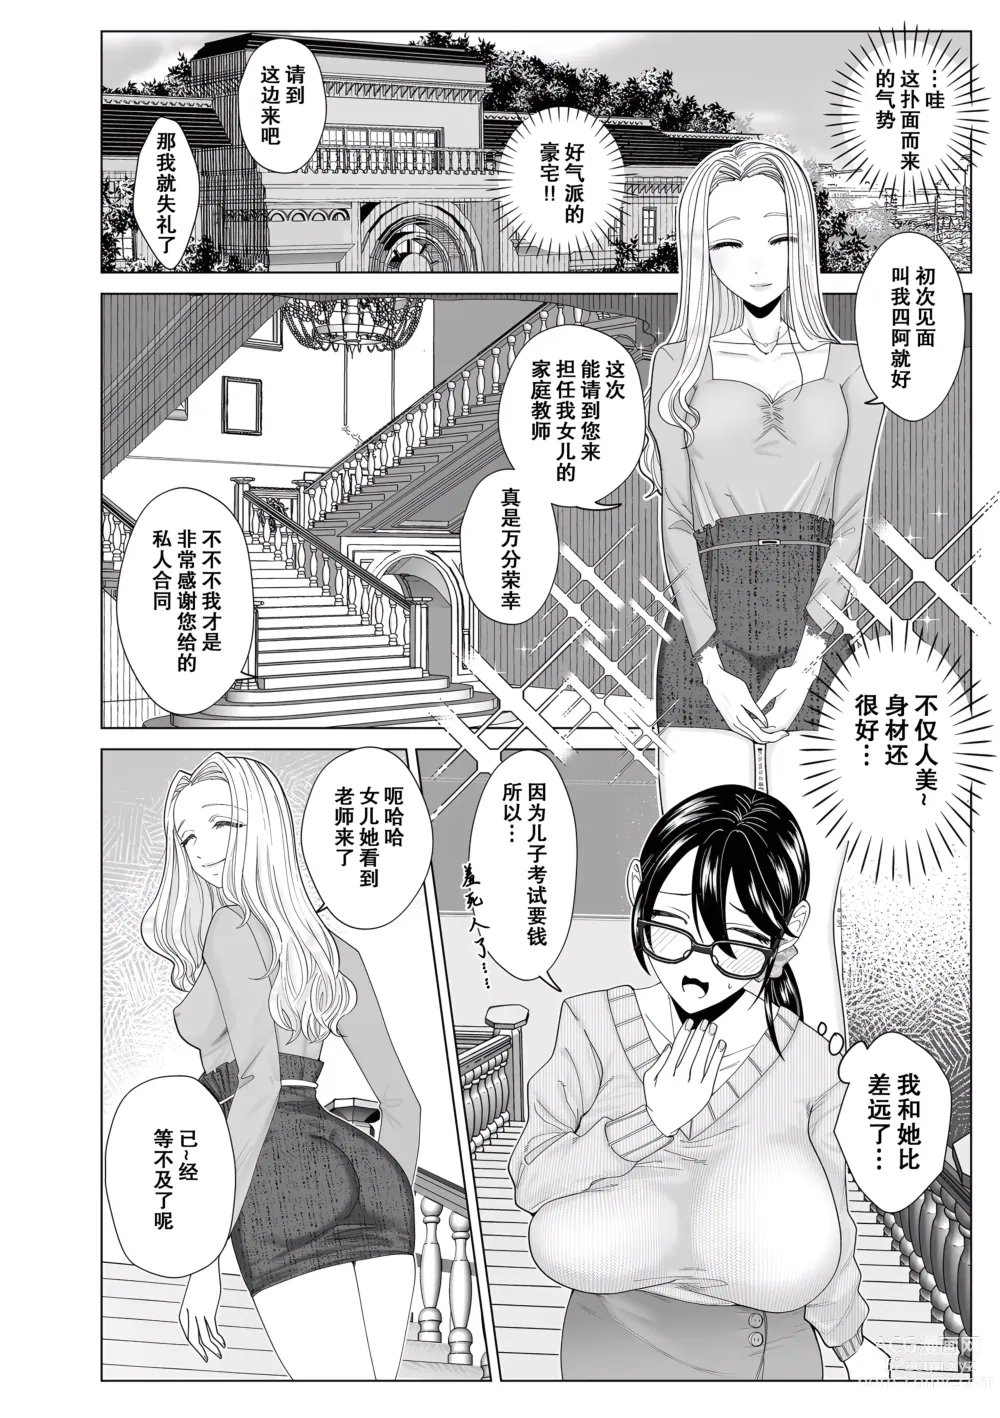 Page 3 of manga Torawarete